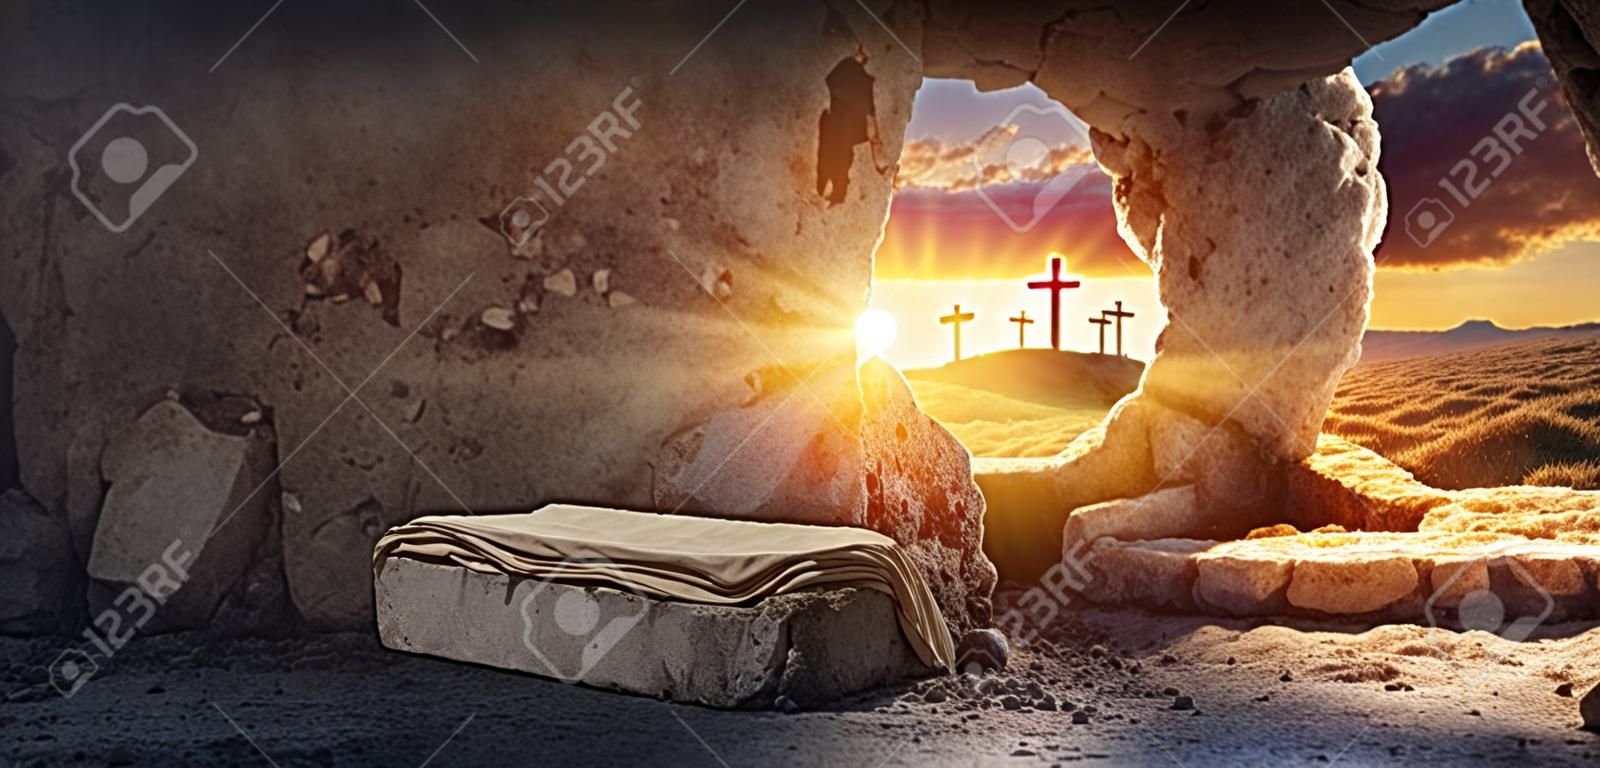 Graf Leeg met Shroud en kruisiging bij zonsopgang Opstanding van Jezus Christus